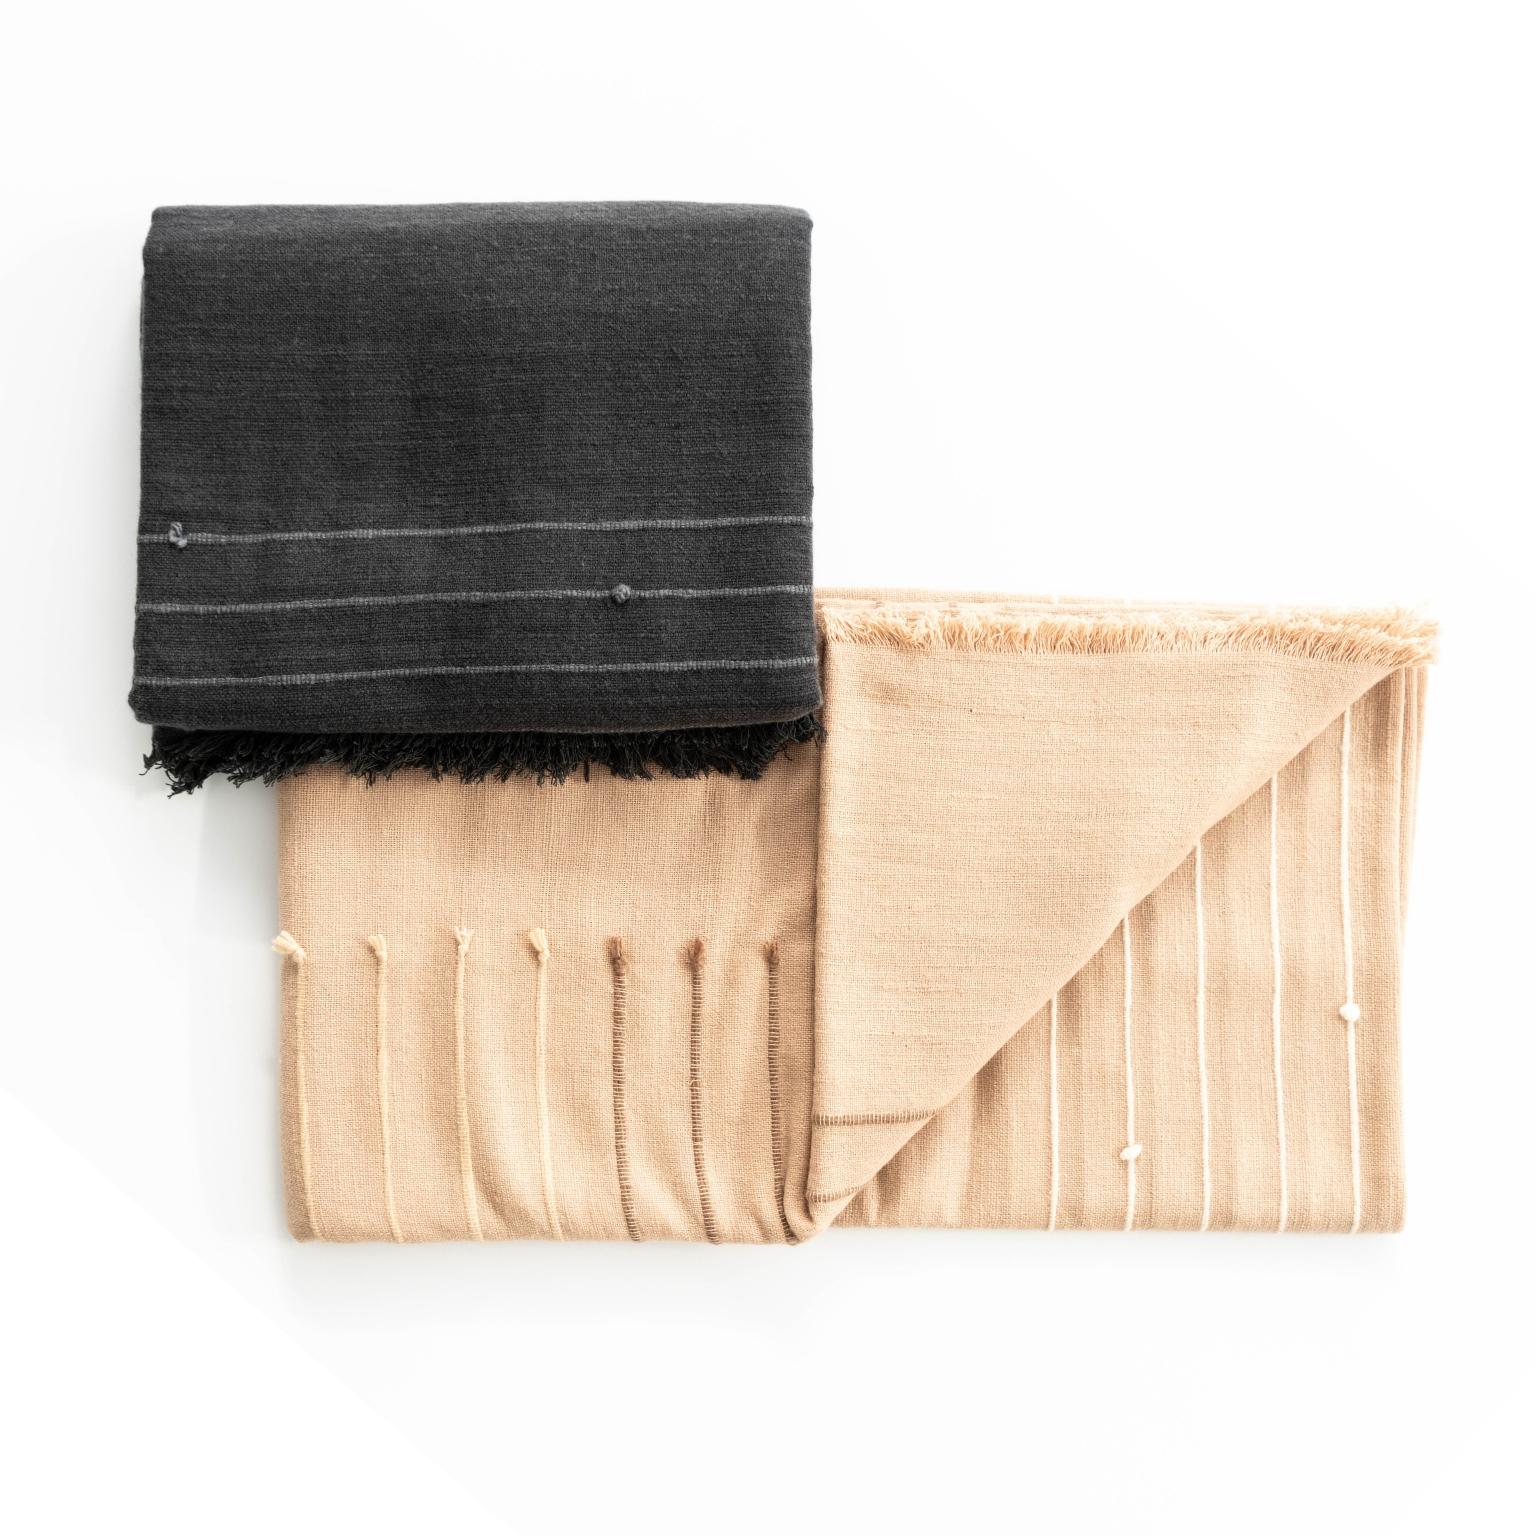  Alei Handloom Throw / Blanket In Charcoal Black , Stripes Pattern  For Sale 7